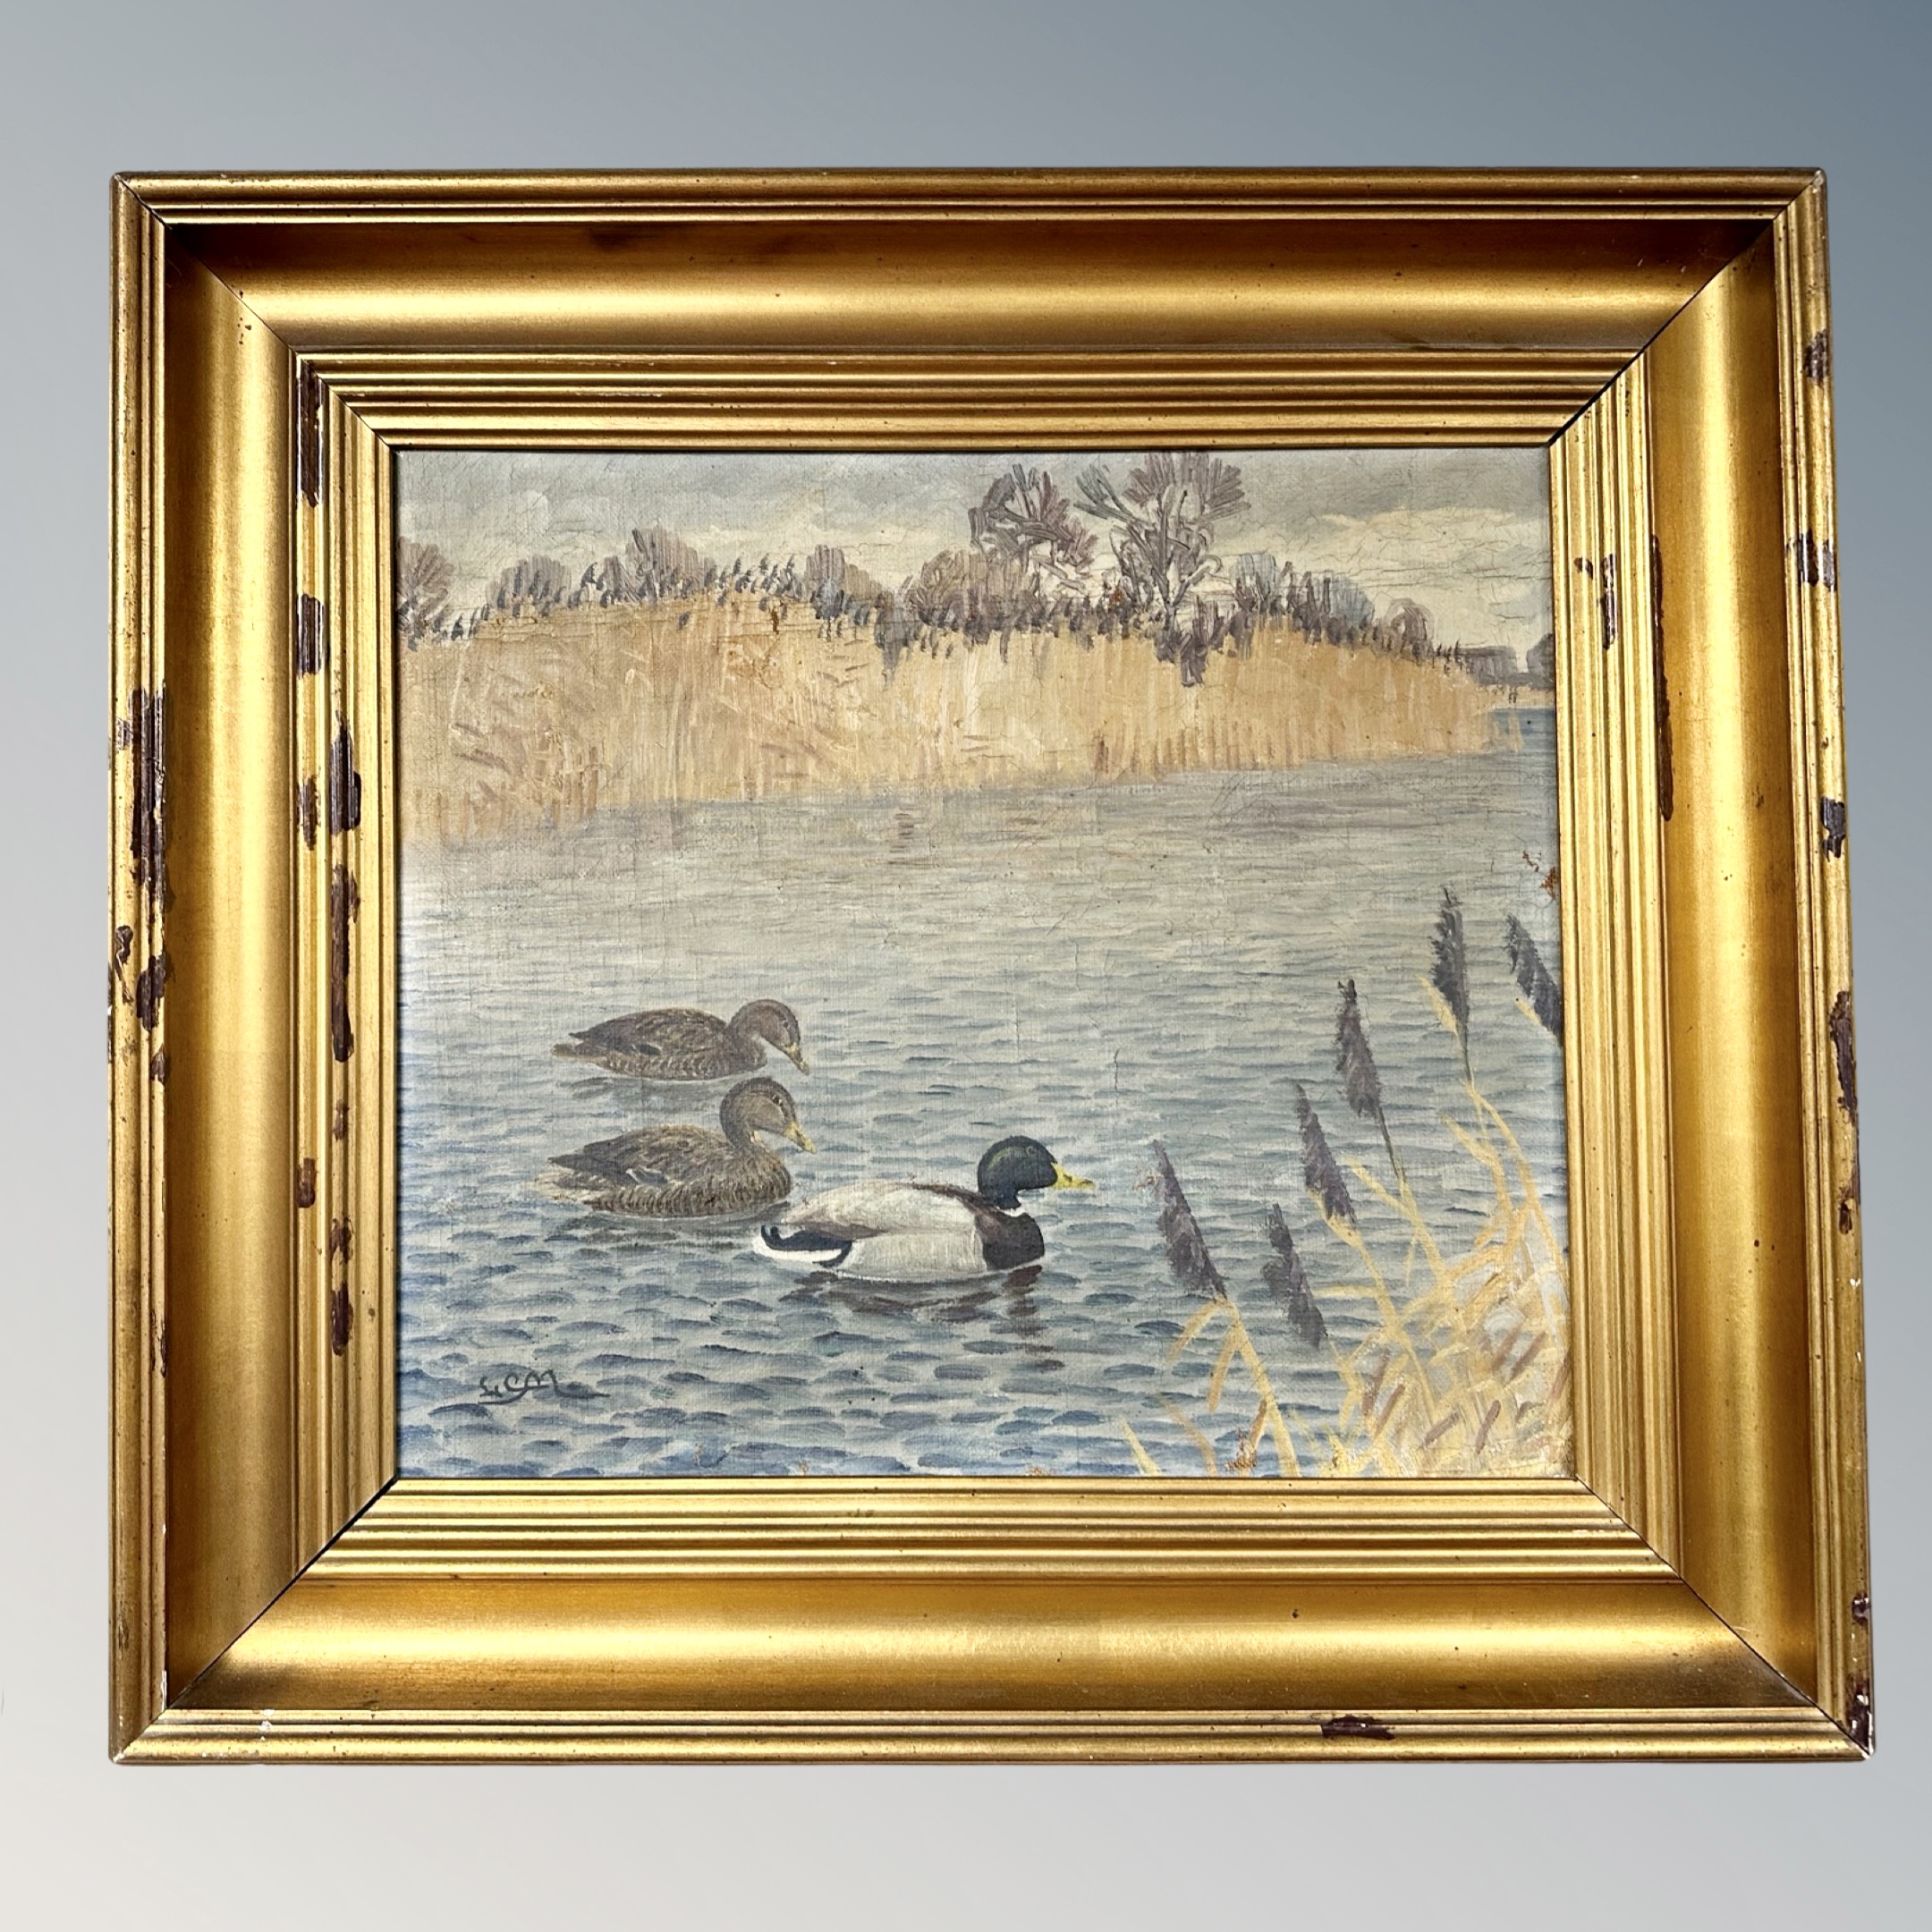 Danish School : Ducks on a river, oil on canvas, 45 cm x 40 cm. - Image 2 of 2